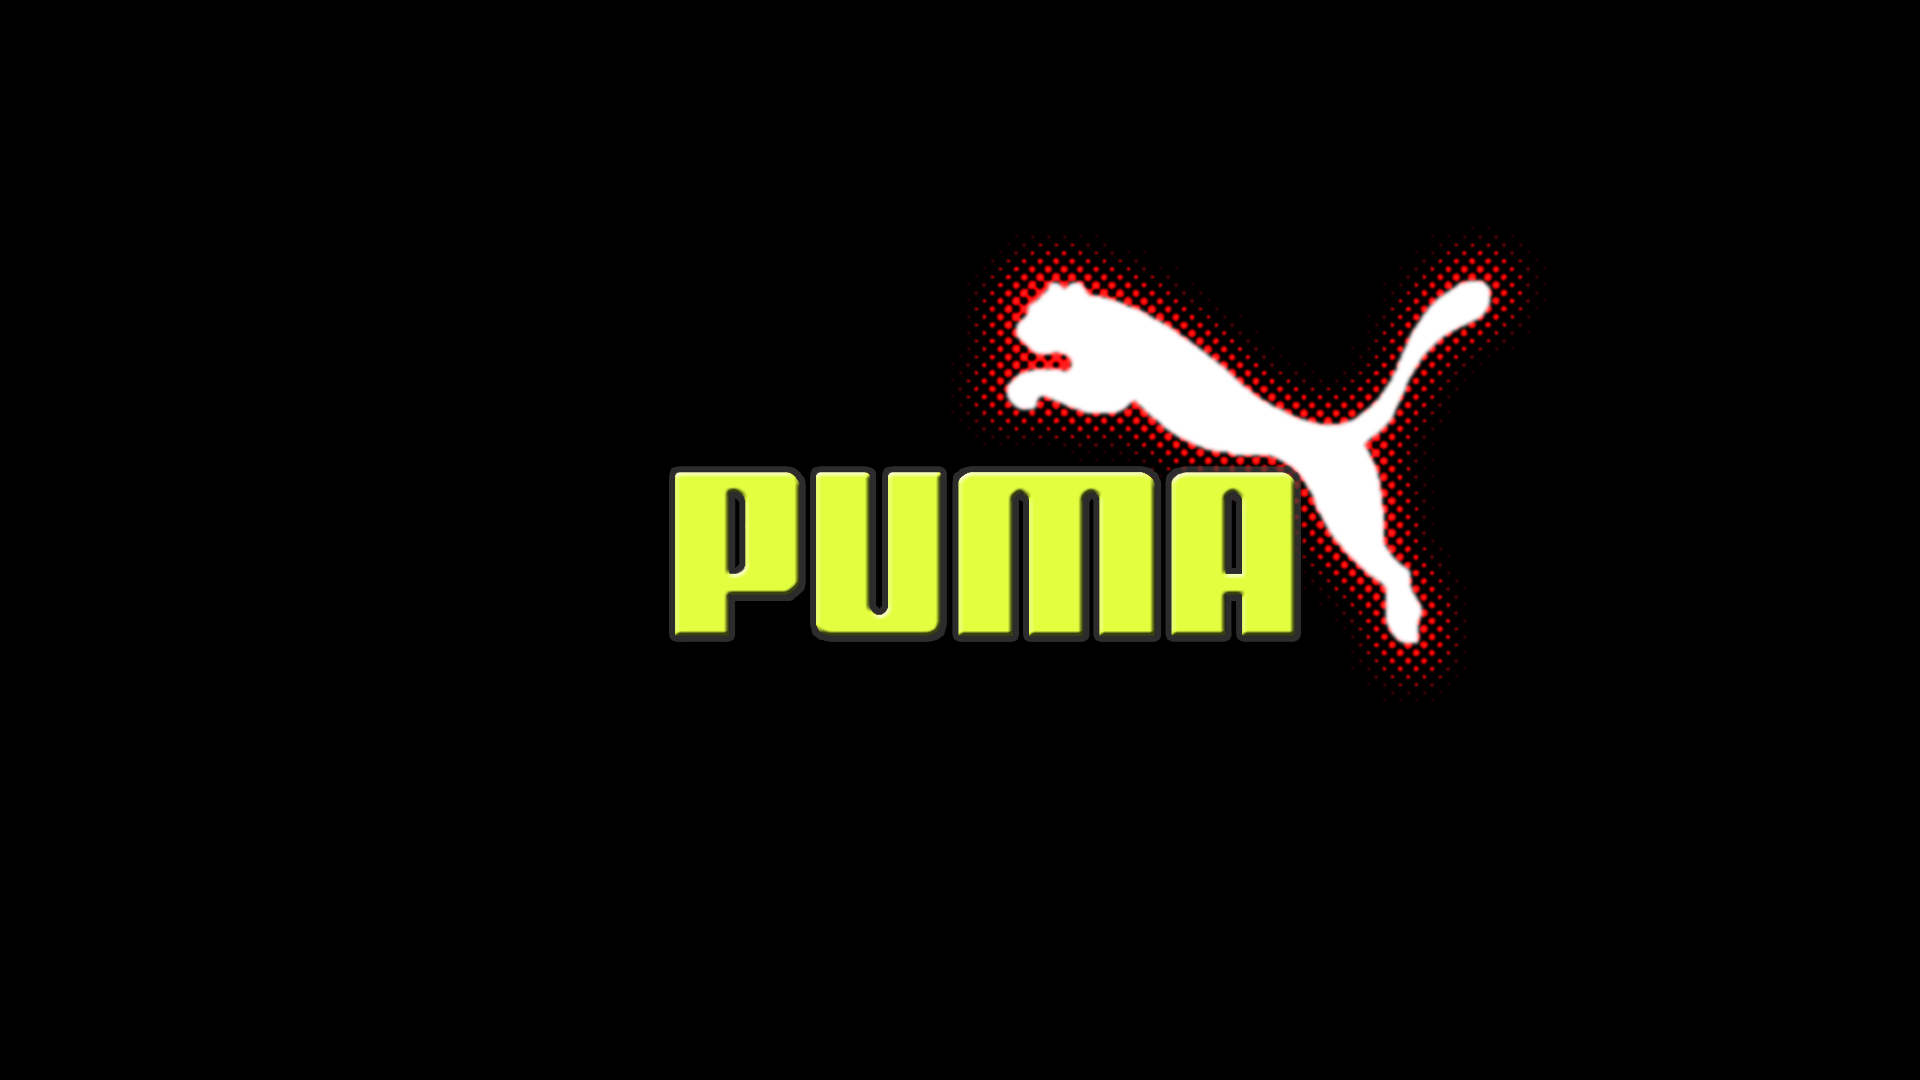 Puma Logo Wallpaper 4644 Hd Wallpapers in Logos   Imagescicom